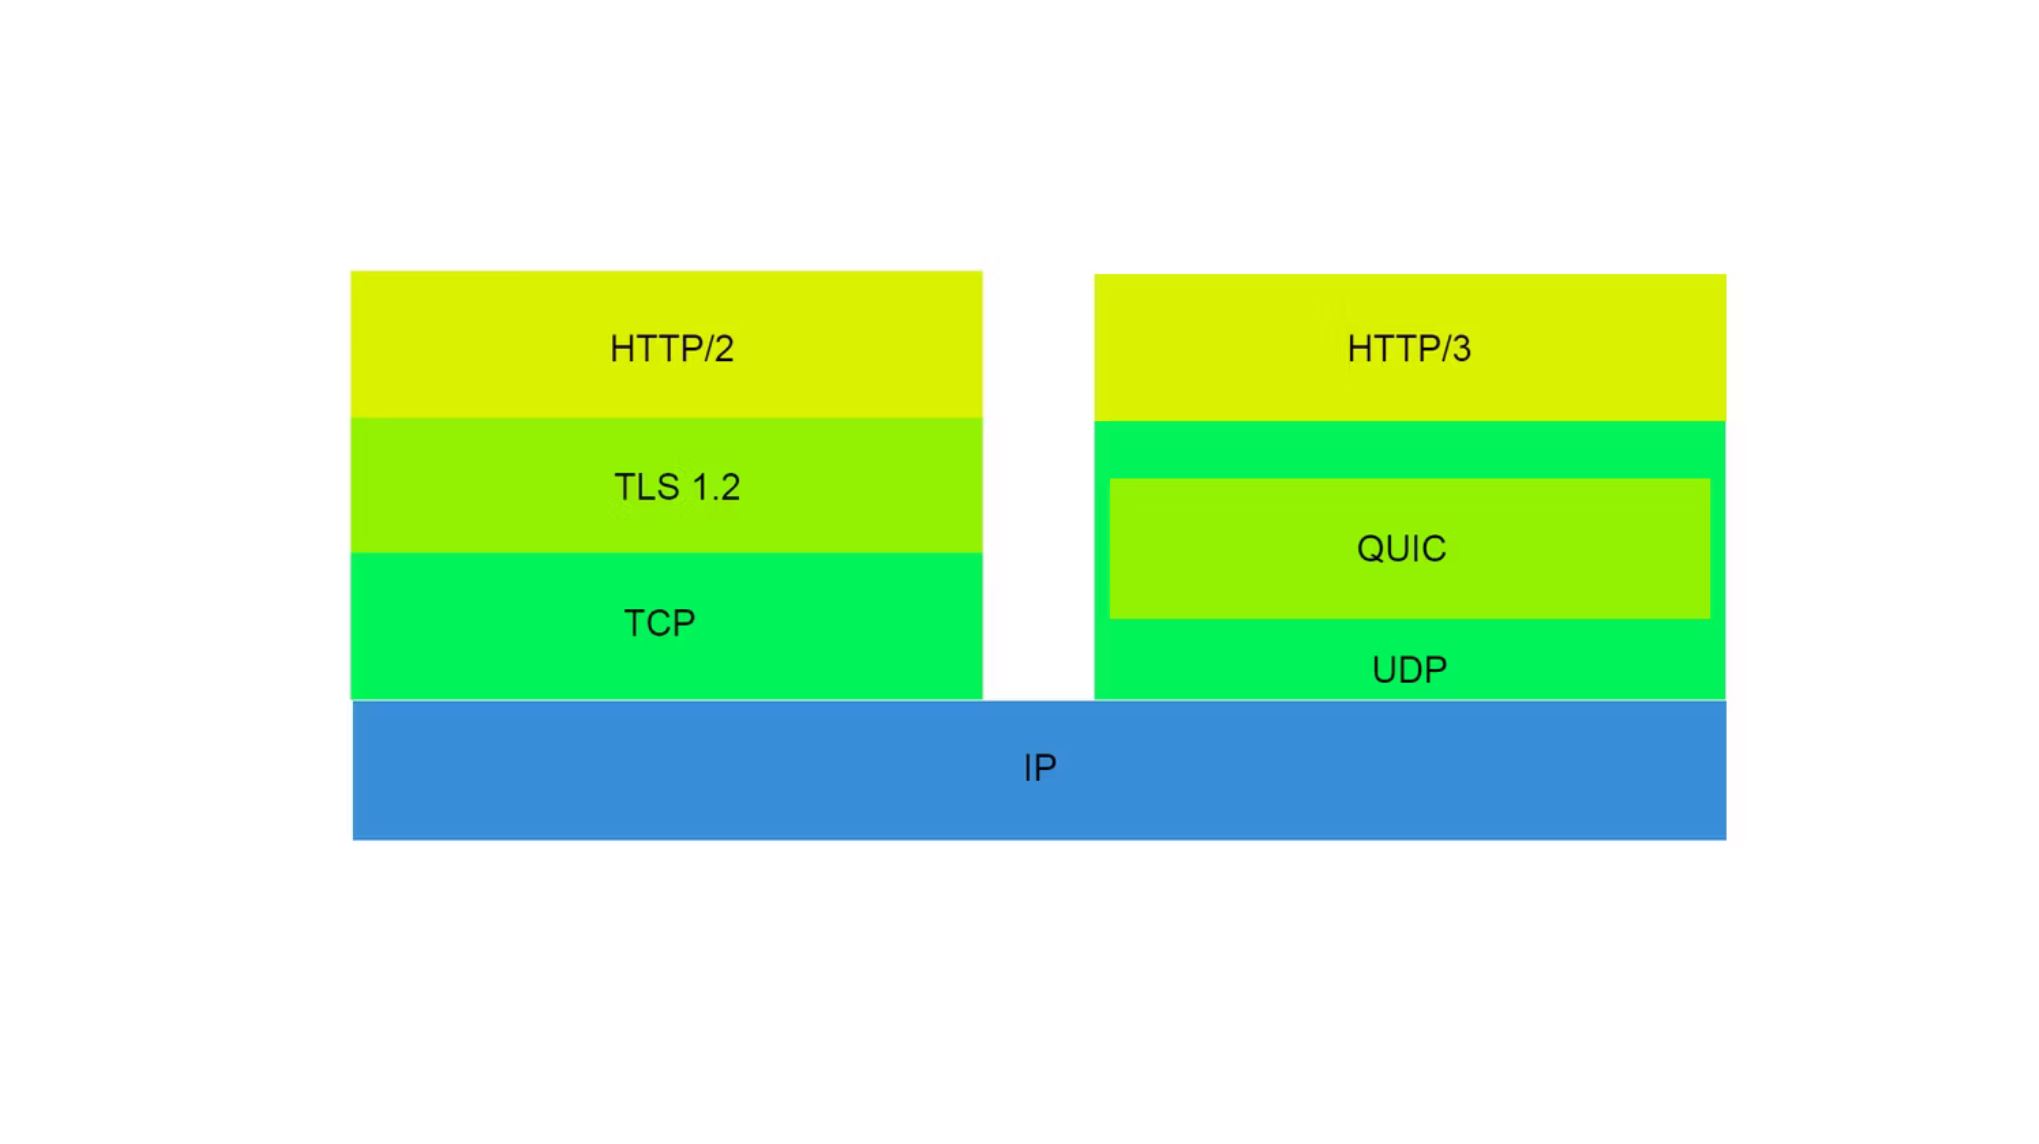 https3 1 - مقایسه عملکرد HTTP/3 در مقابل HTTP/2